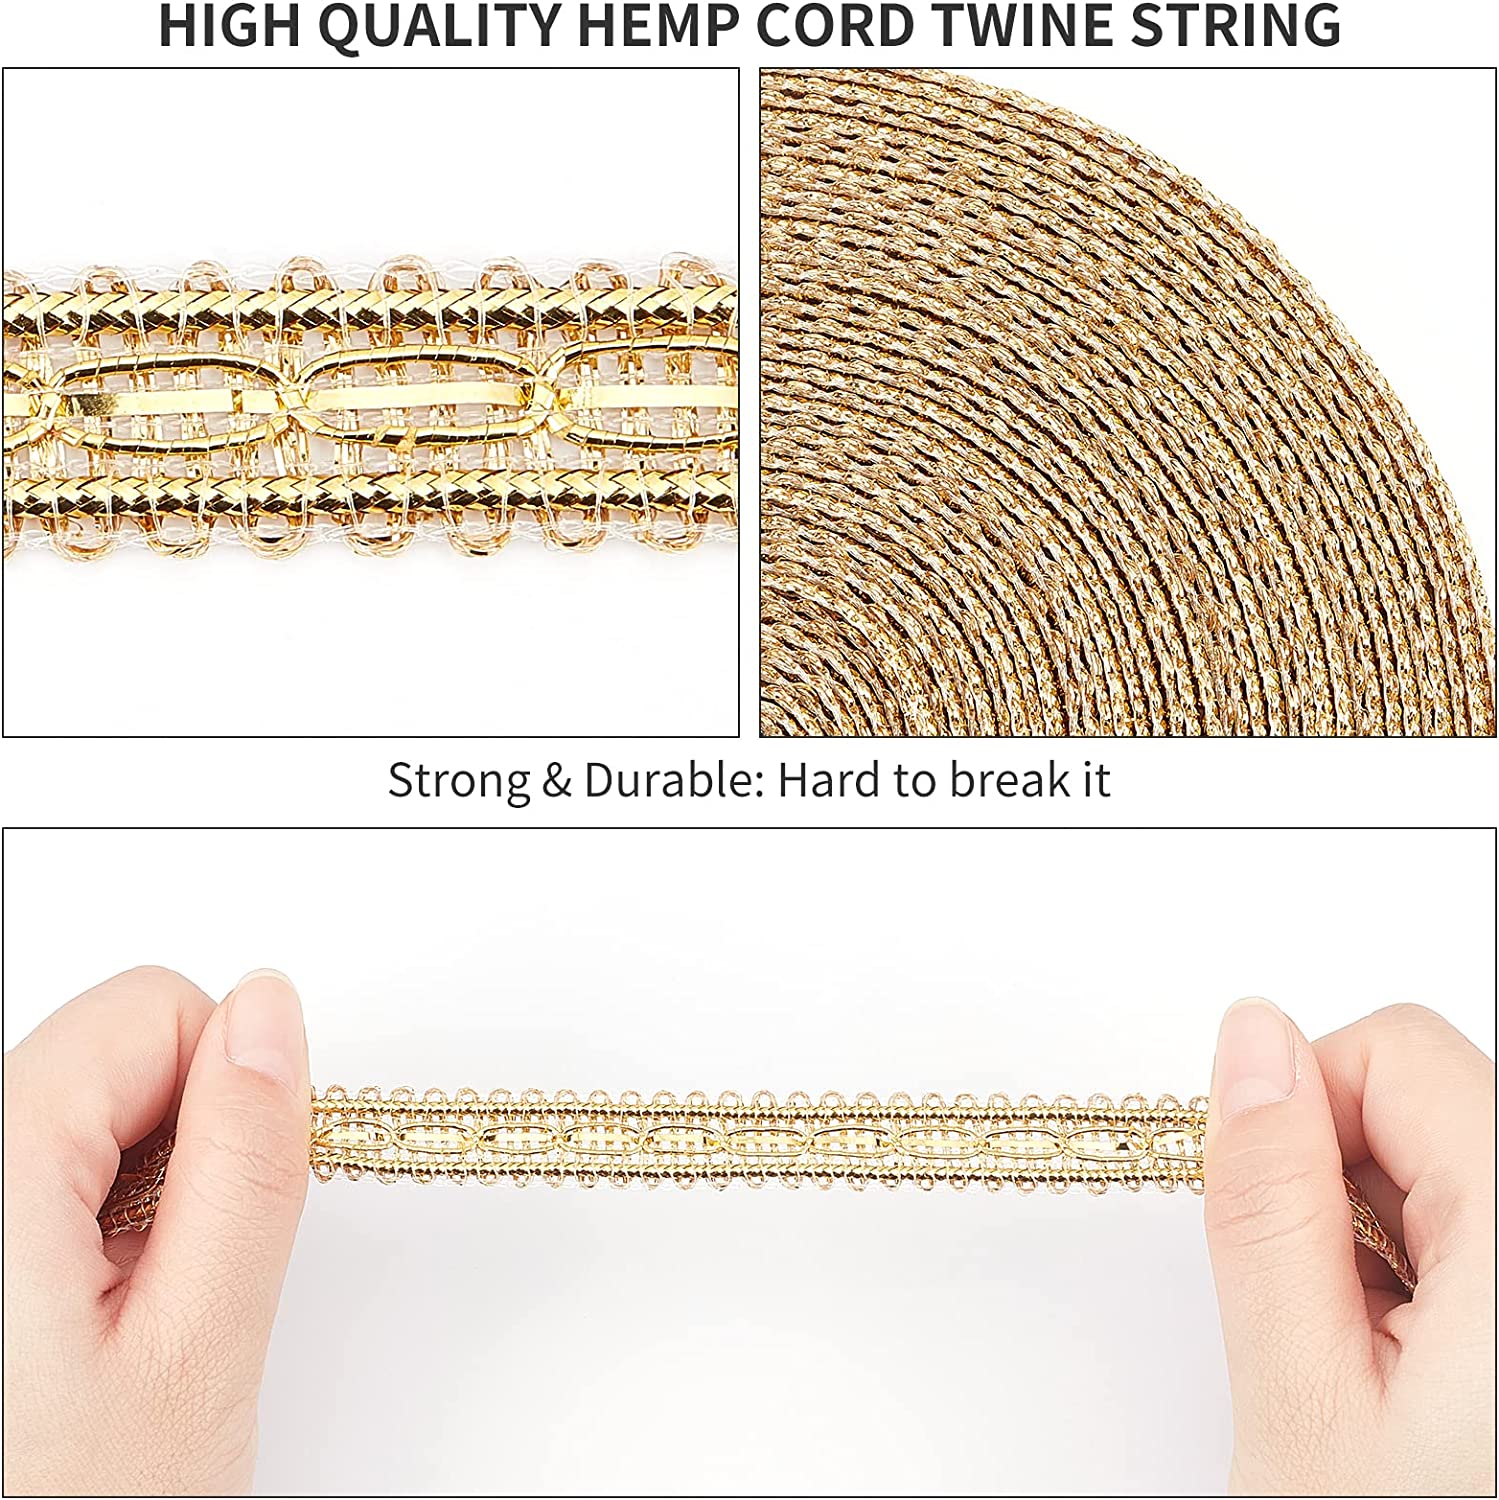 21.8 Yards Gimp Braid Trim 14mm/0.5 Shiny Lurex Trim Gold Decorative Fabric Ribbon Metallic Braid Lace Trim for Costume DIY Sewing Craft Embellishment Upholstery Home Decor